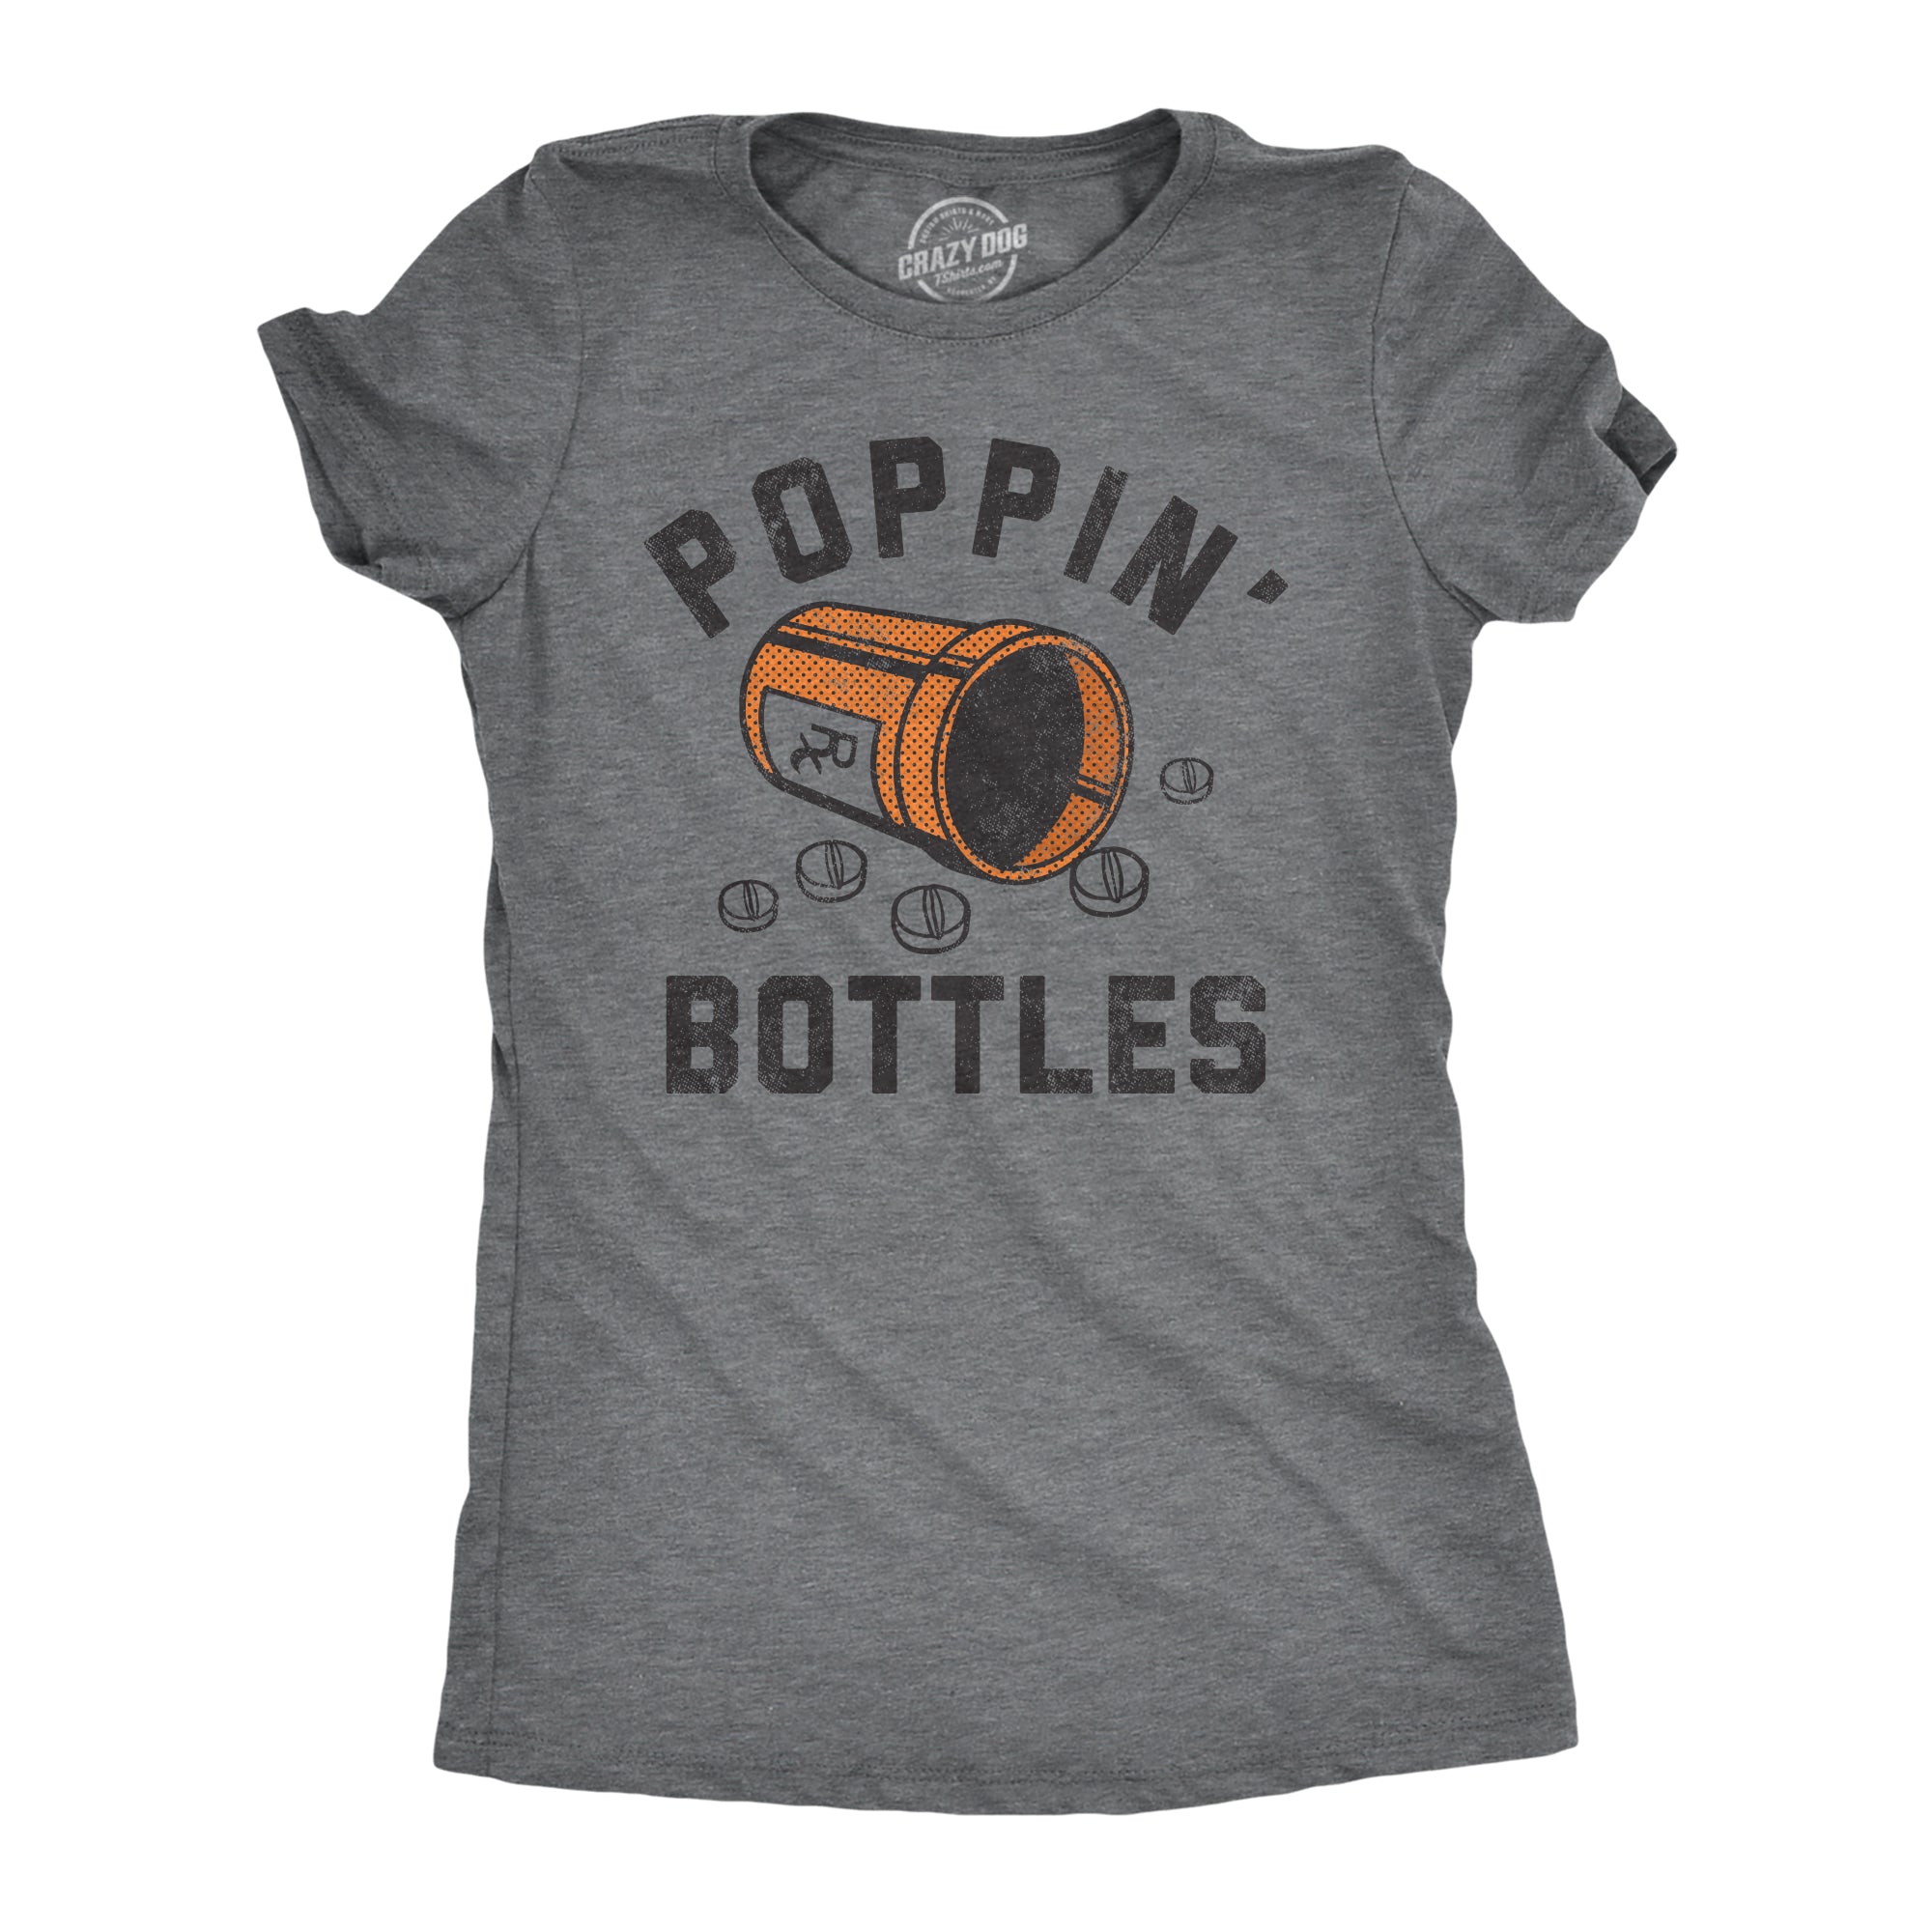 Funny Dark Heather Grey - BOTTLES Poppin Bottles Womens T Shirt Nerdy Sarcastic Tee